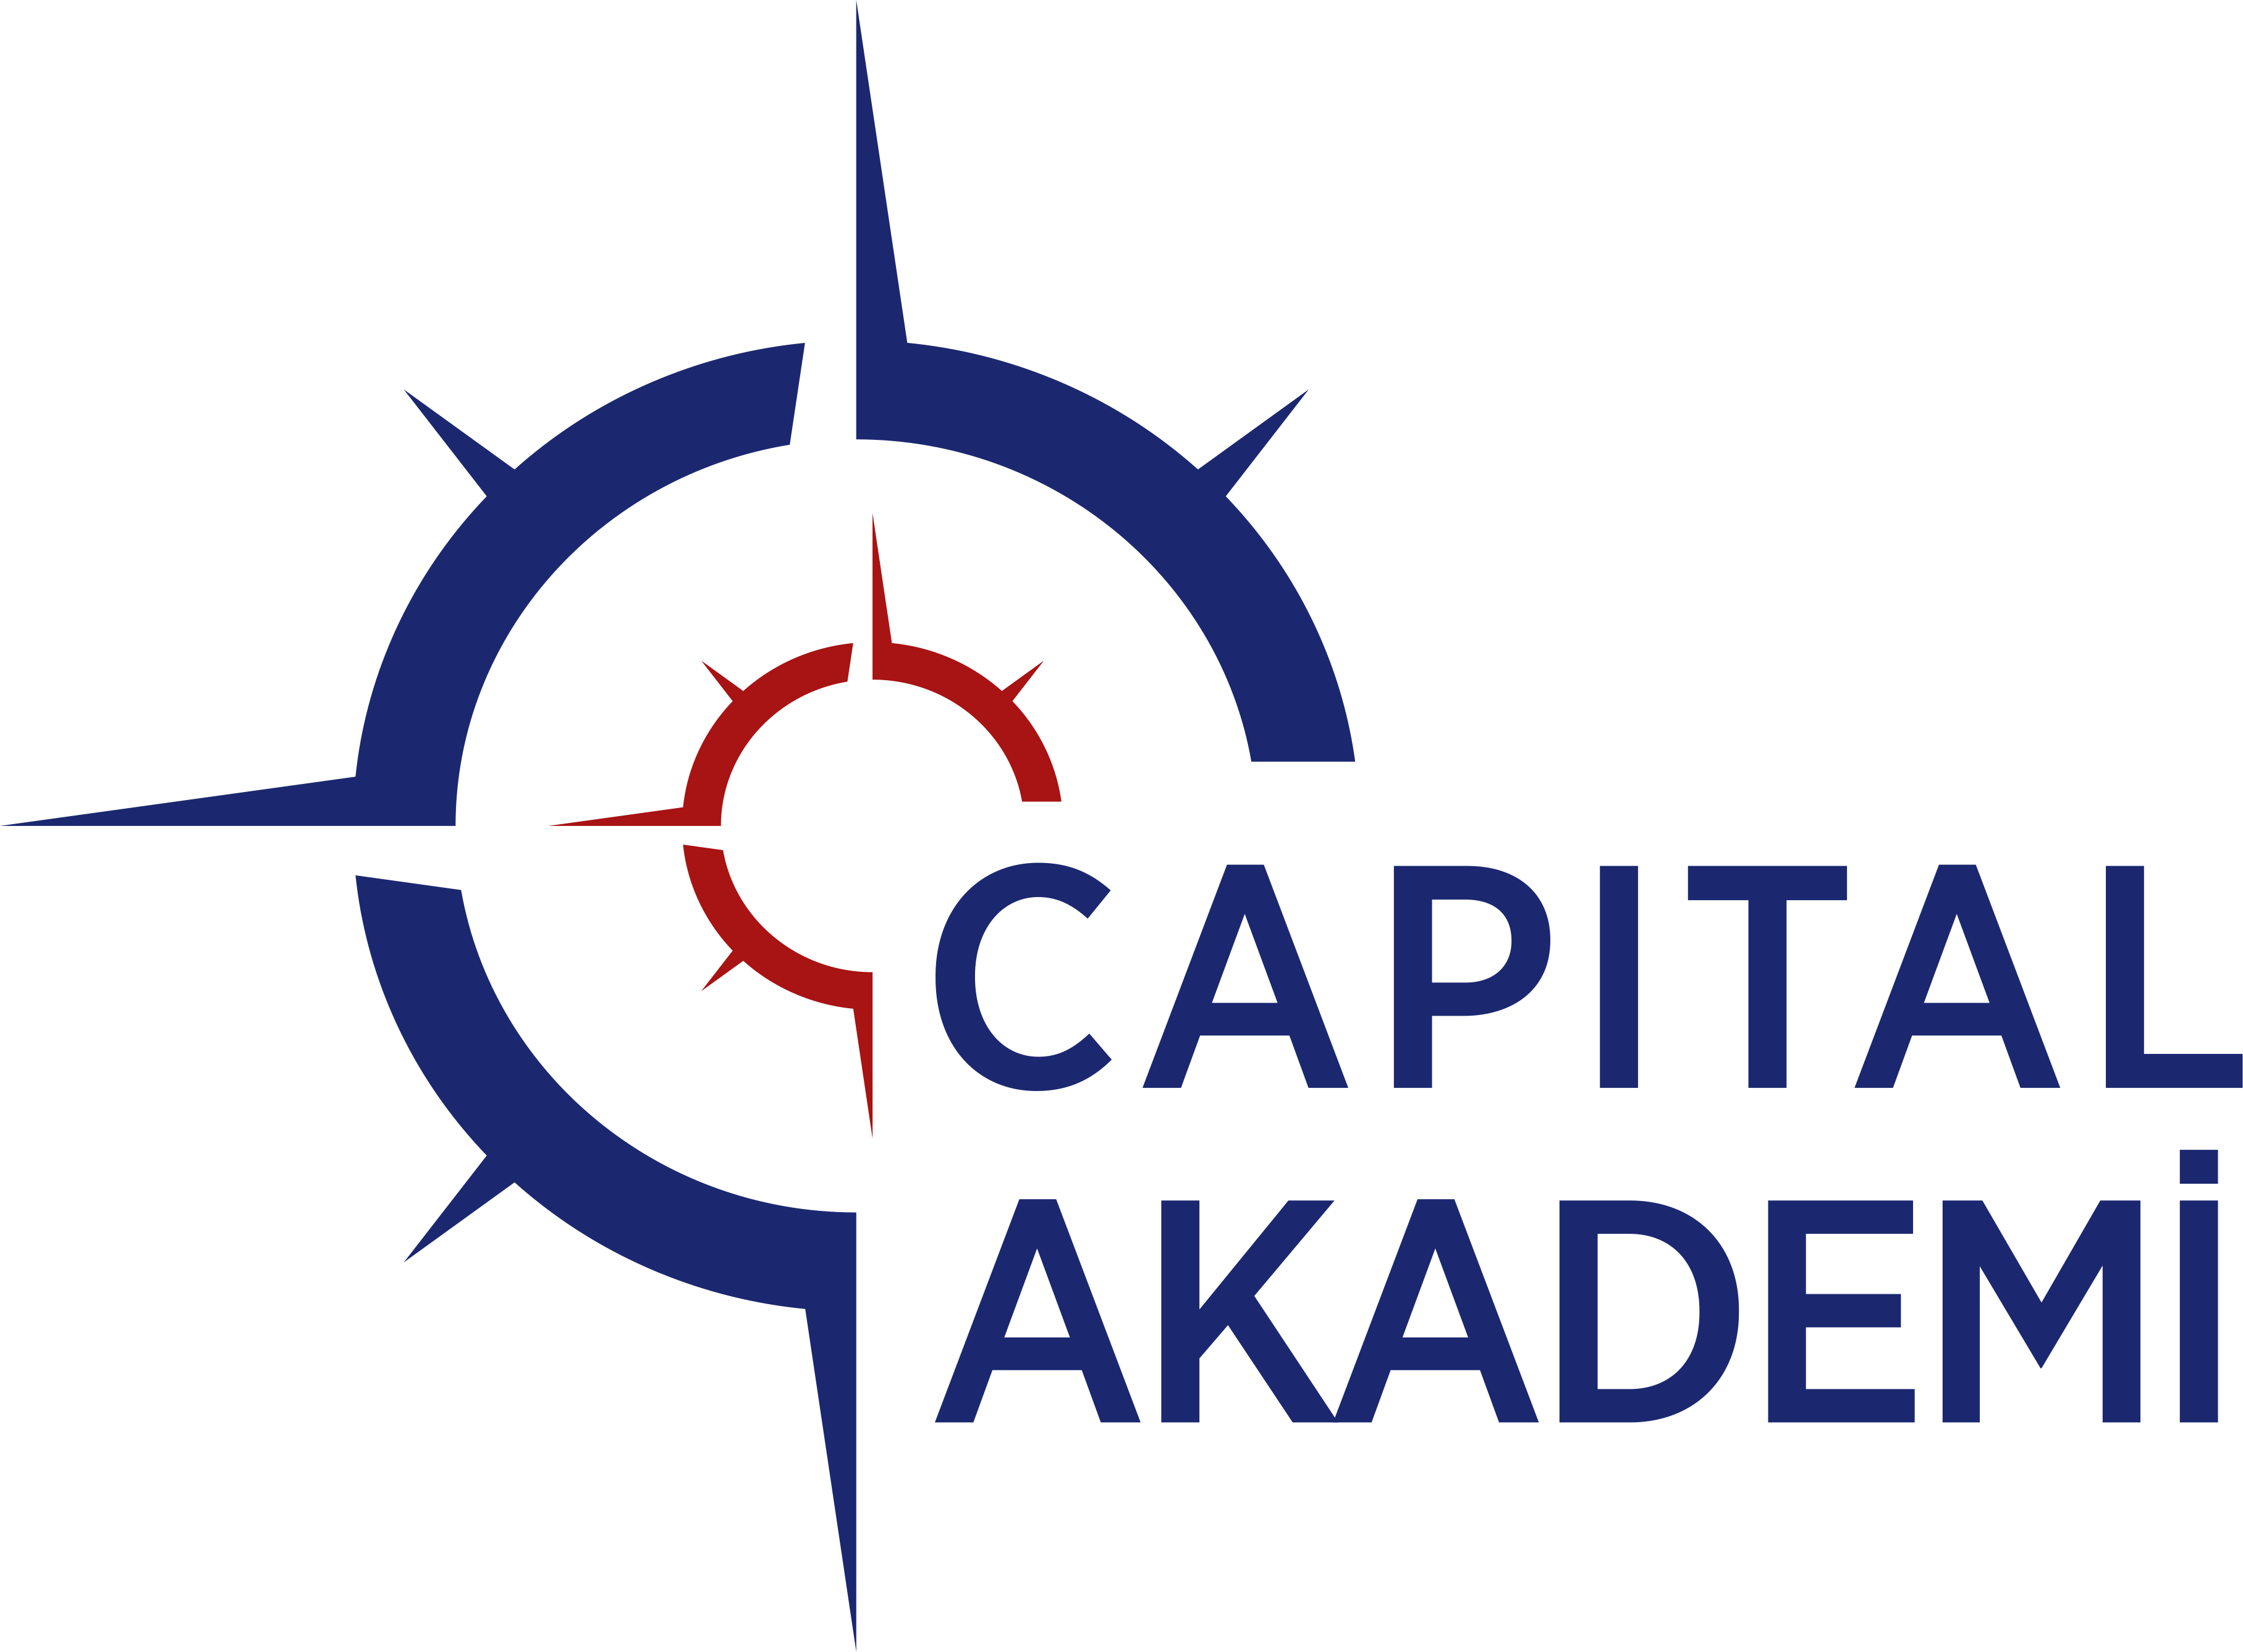 Capital Akademi